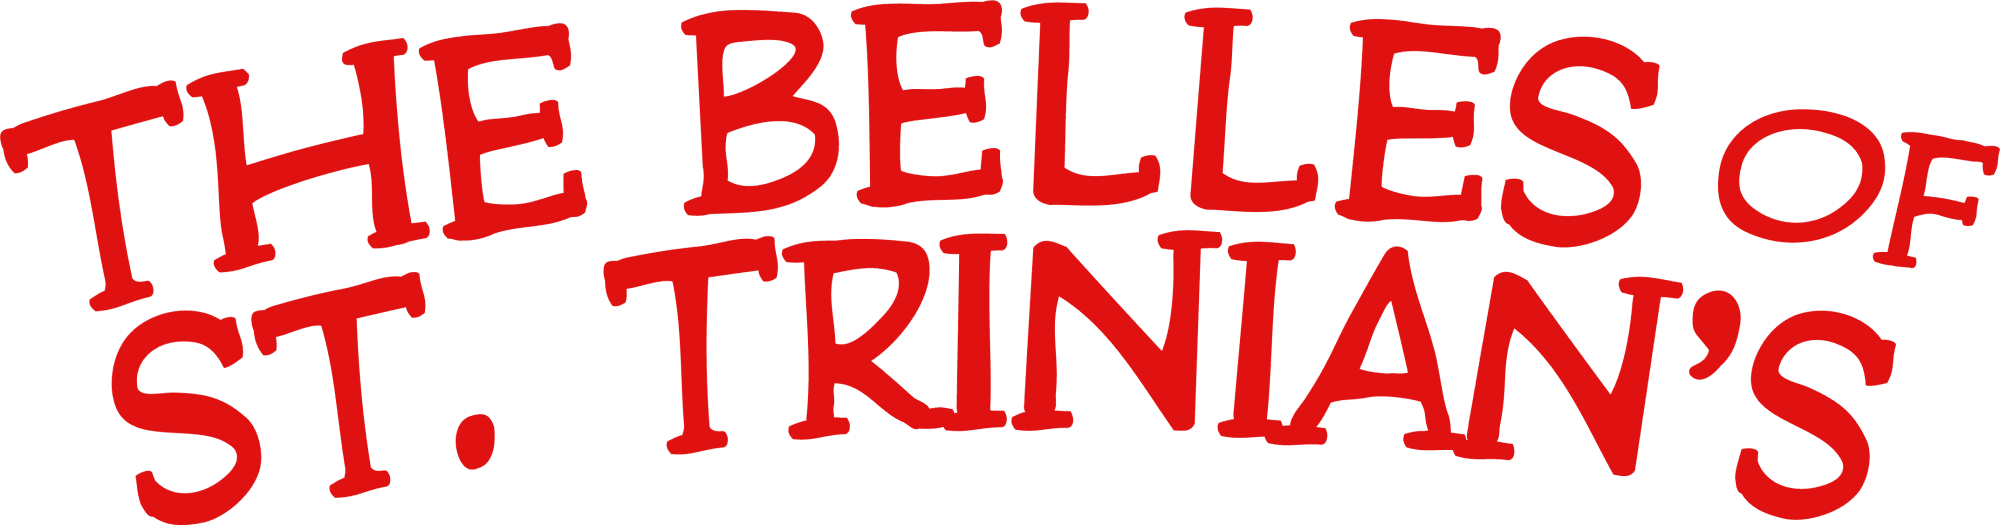 The Belles of St. Trinian's logo